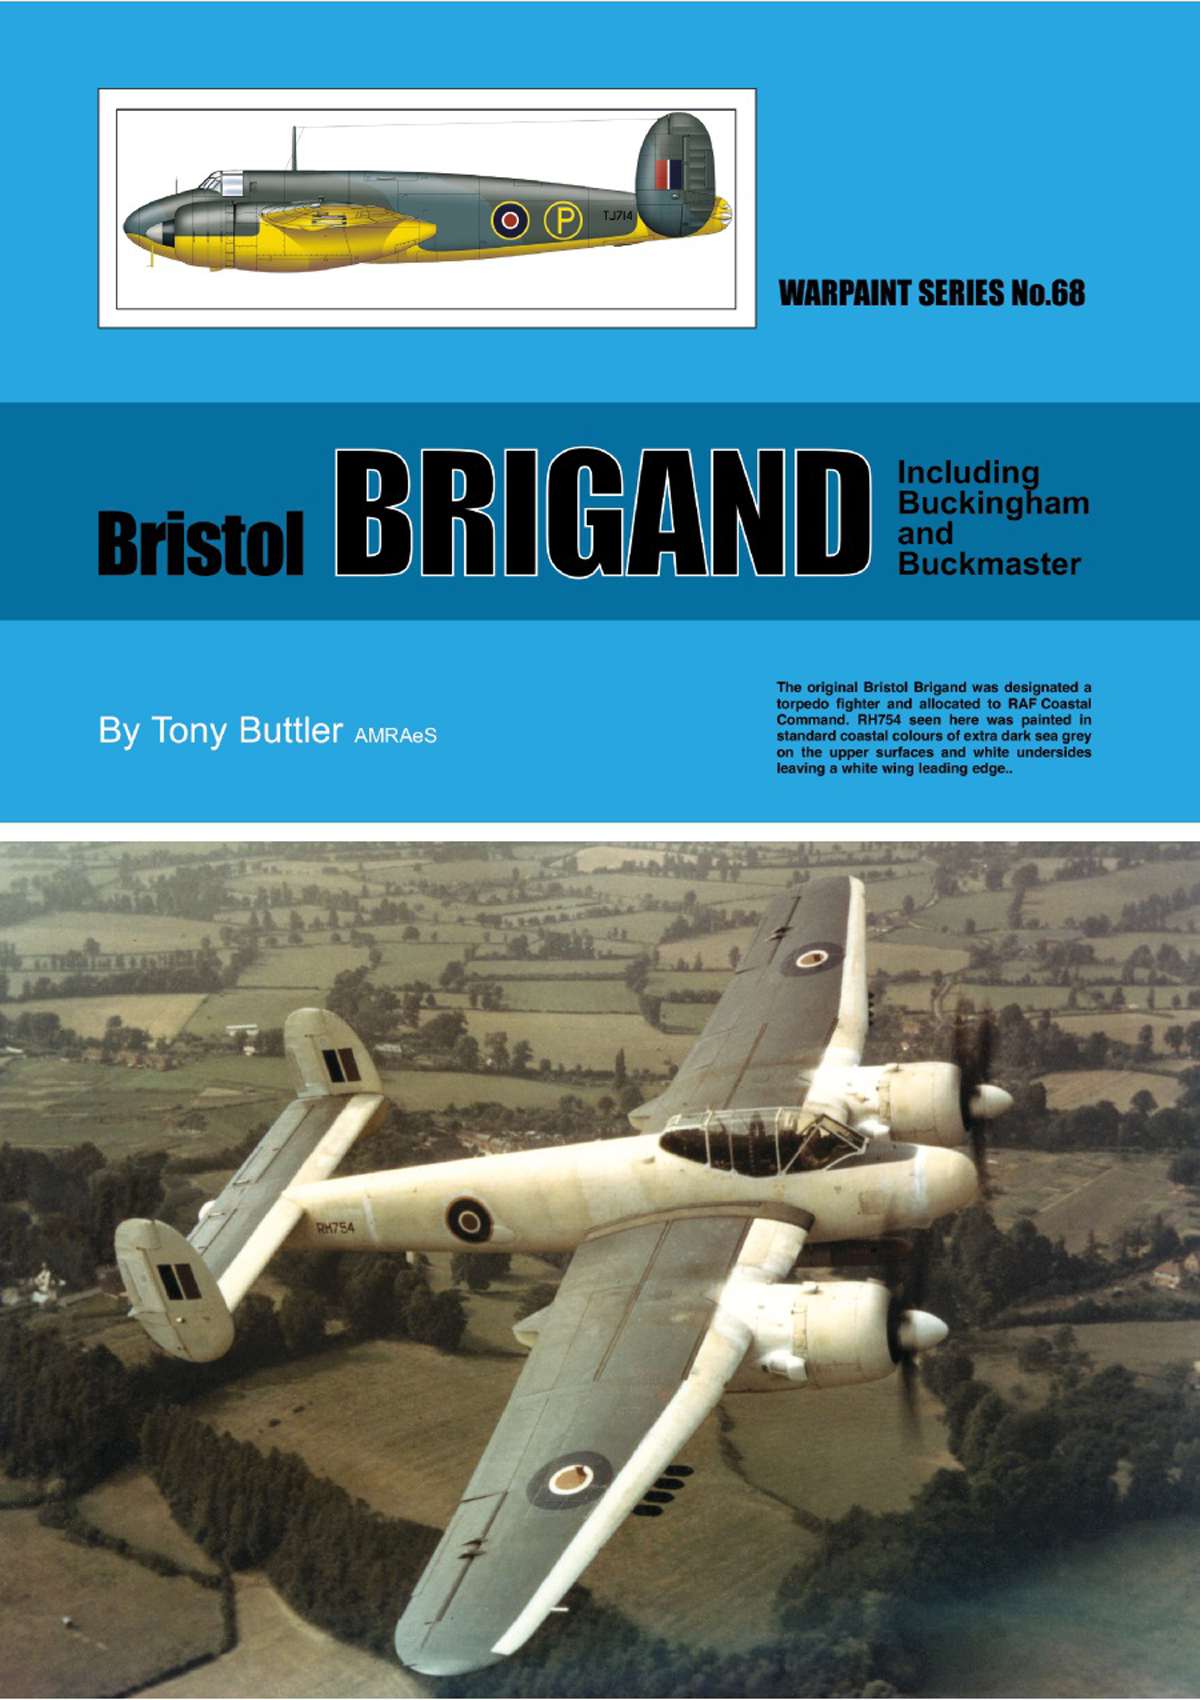 N68 - Bristol Brigand including Buckingham and Buckmaster